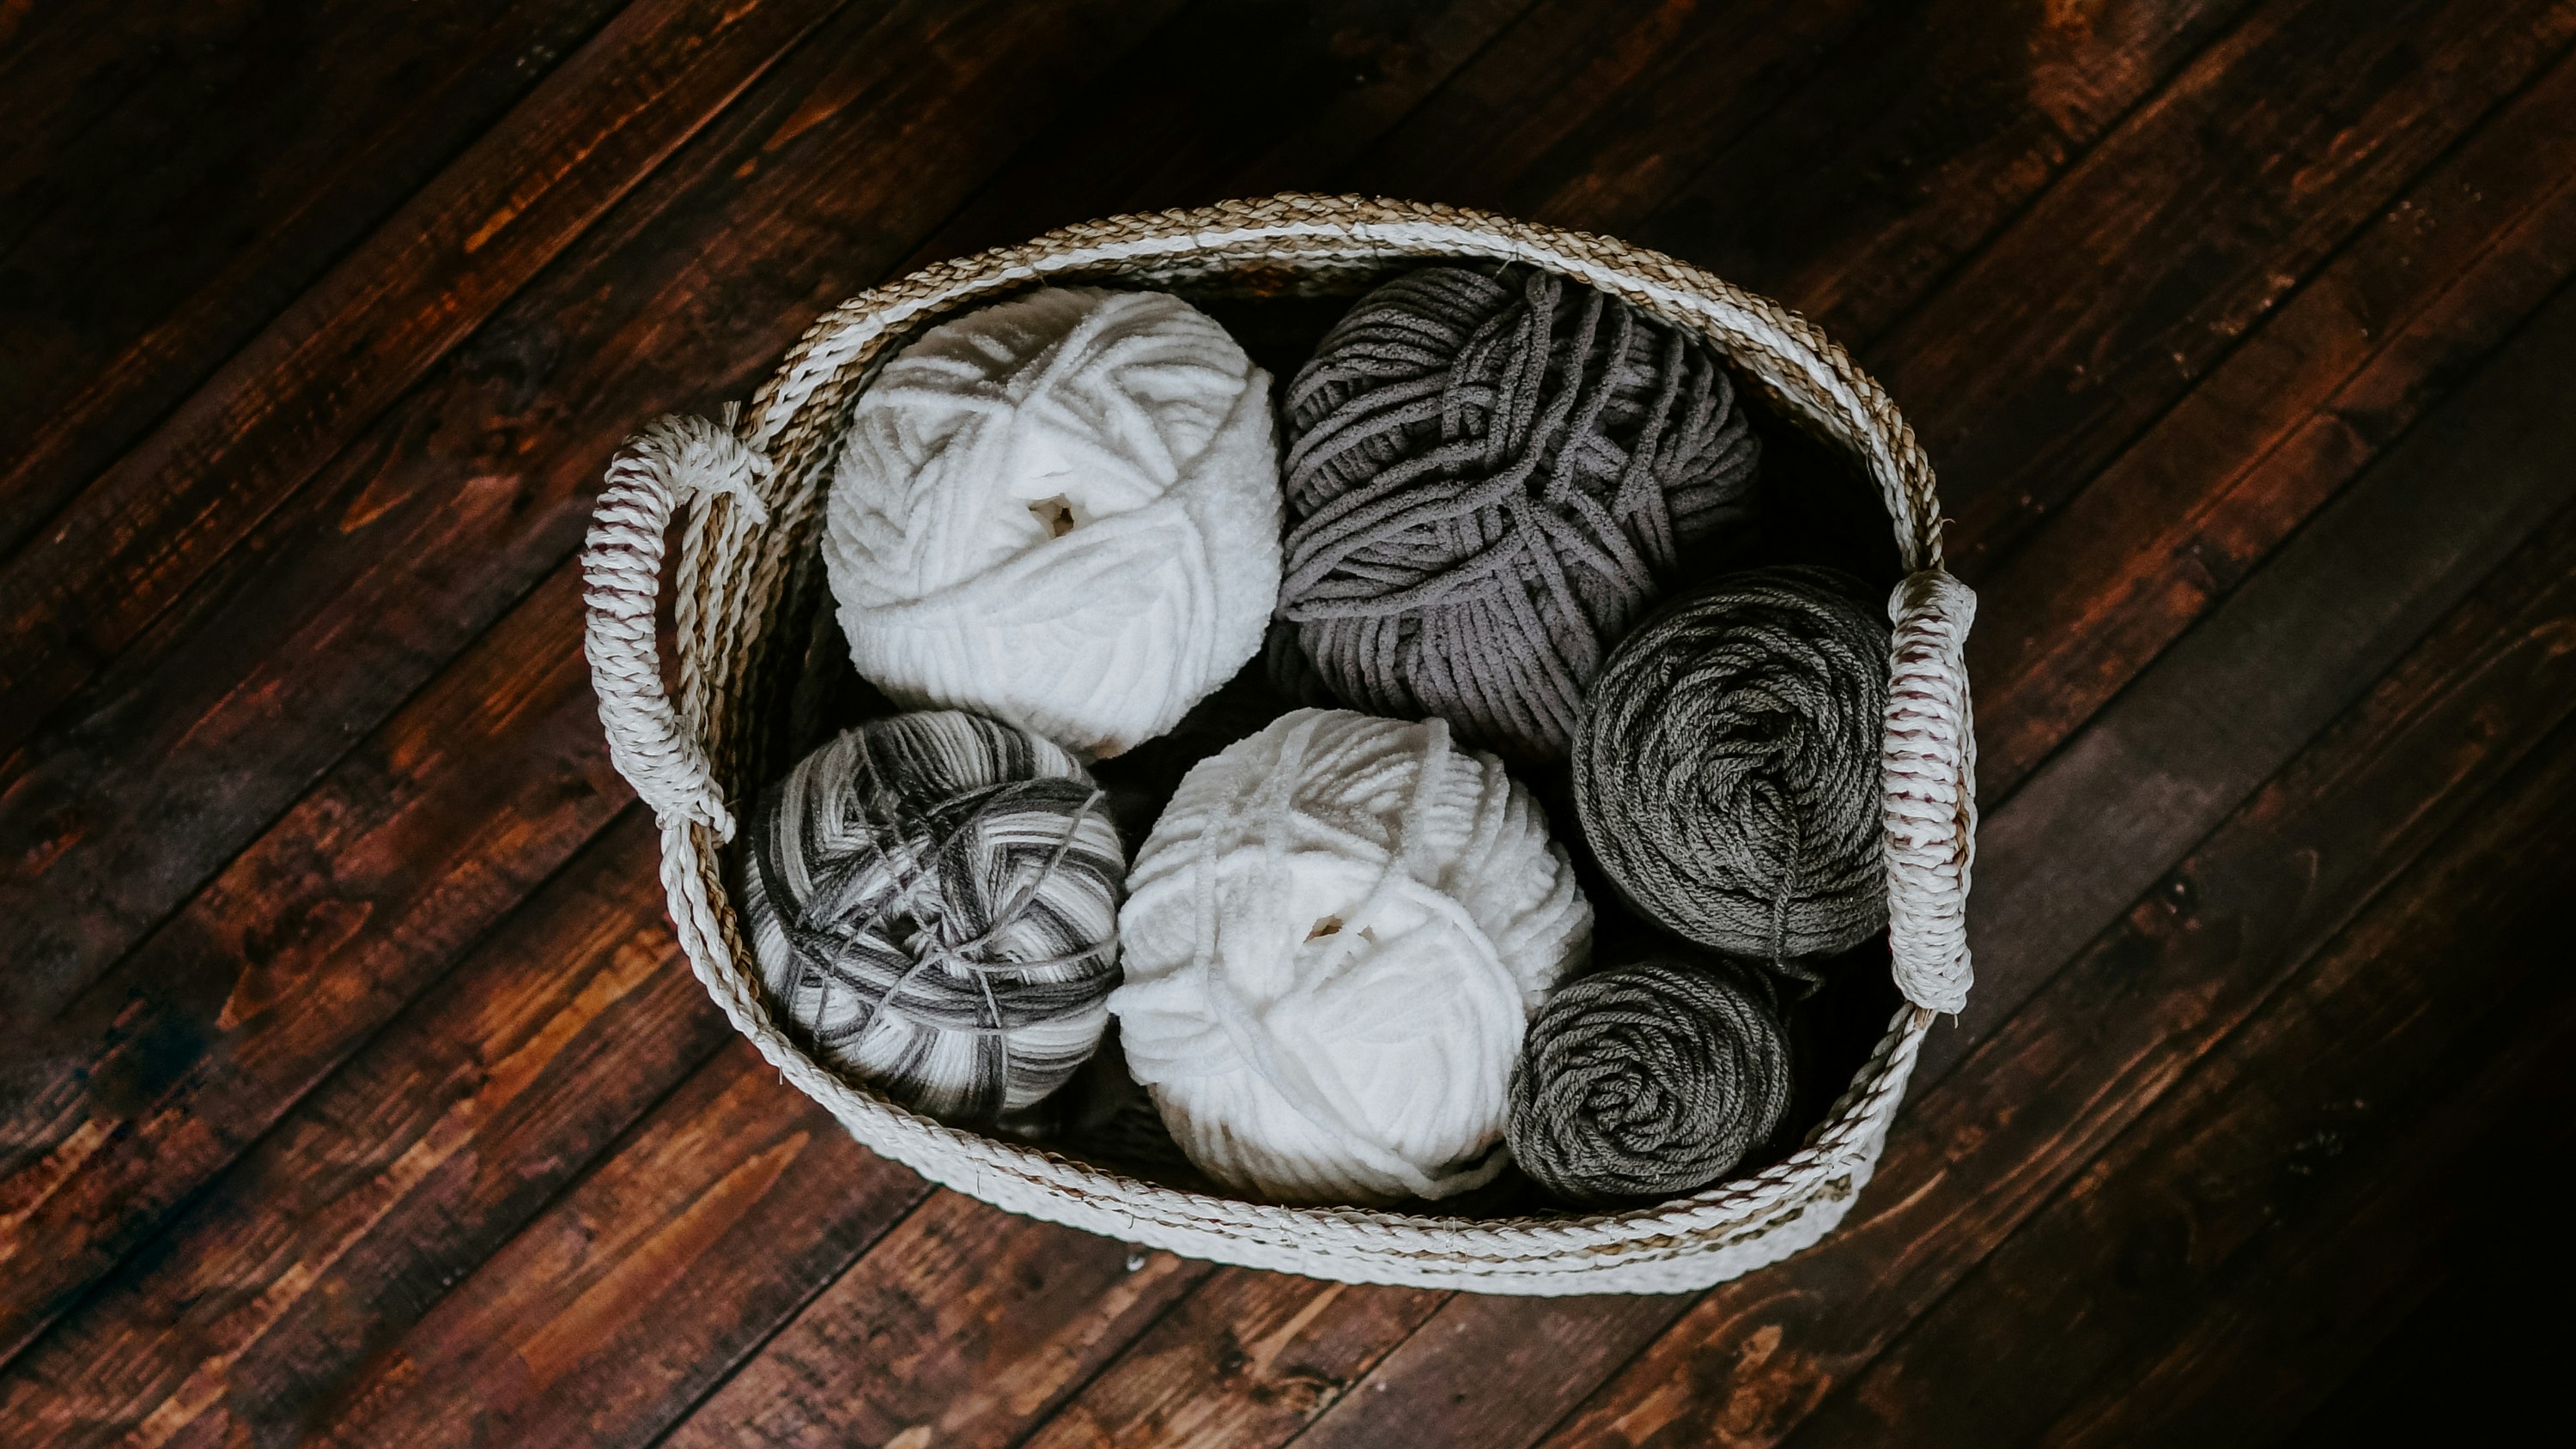 Baket of Yarn